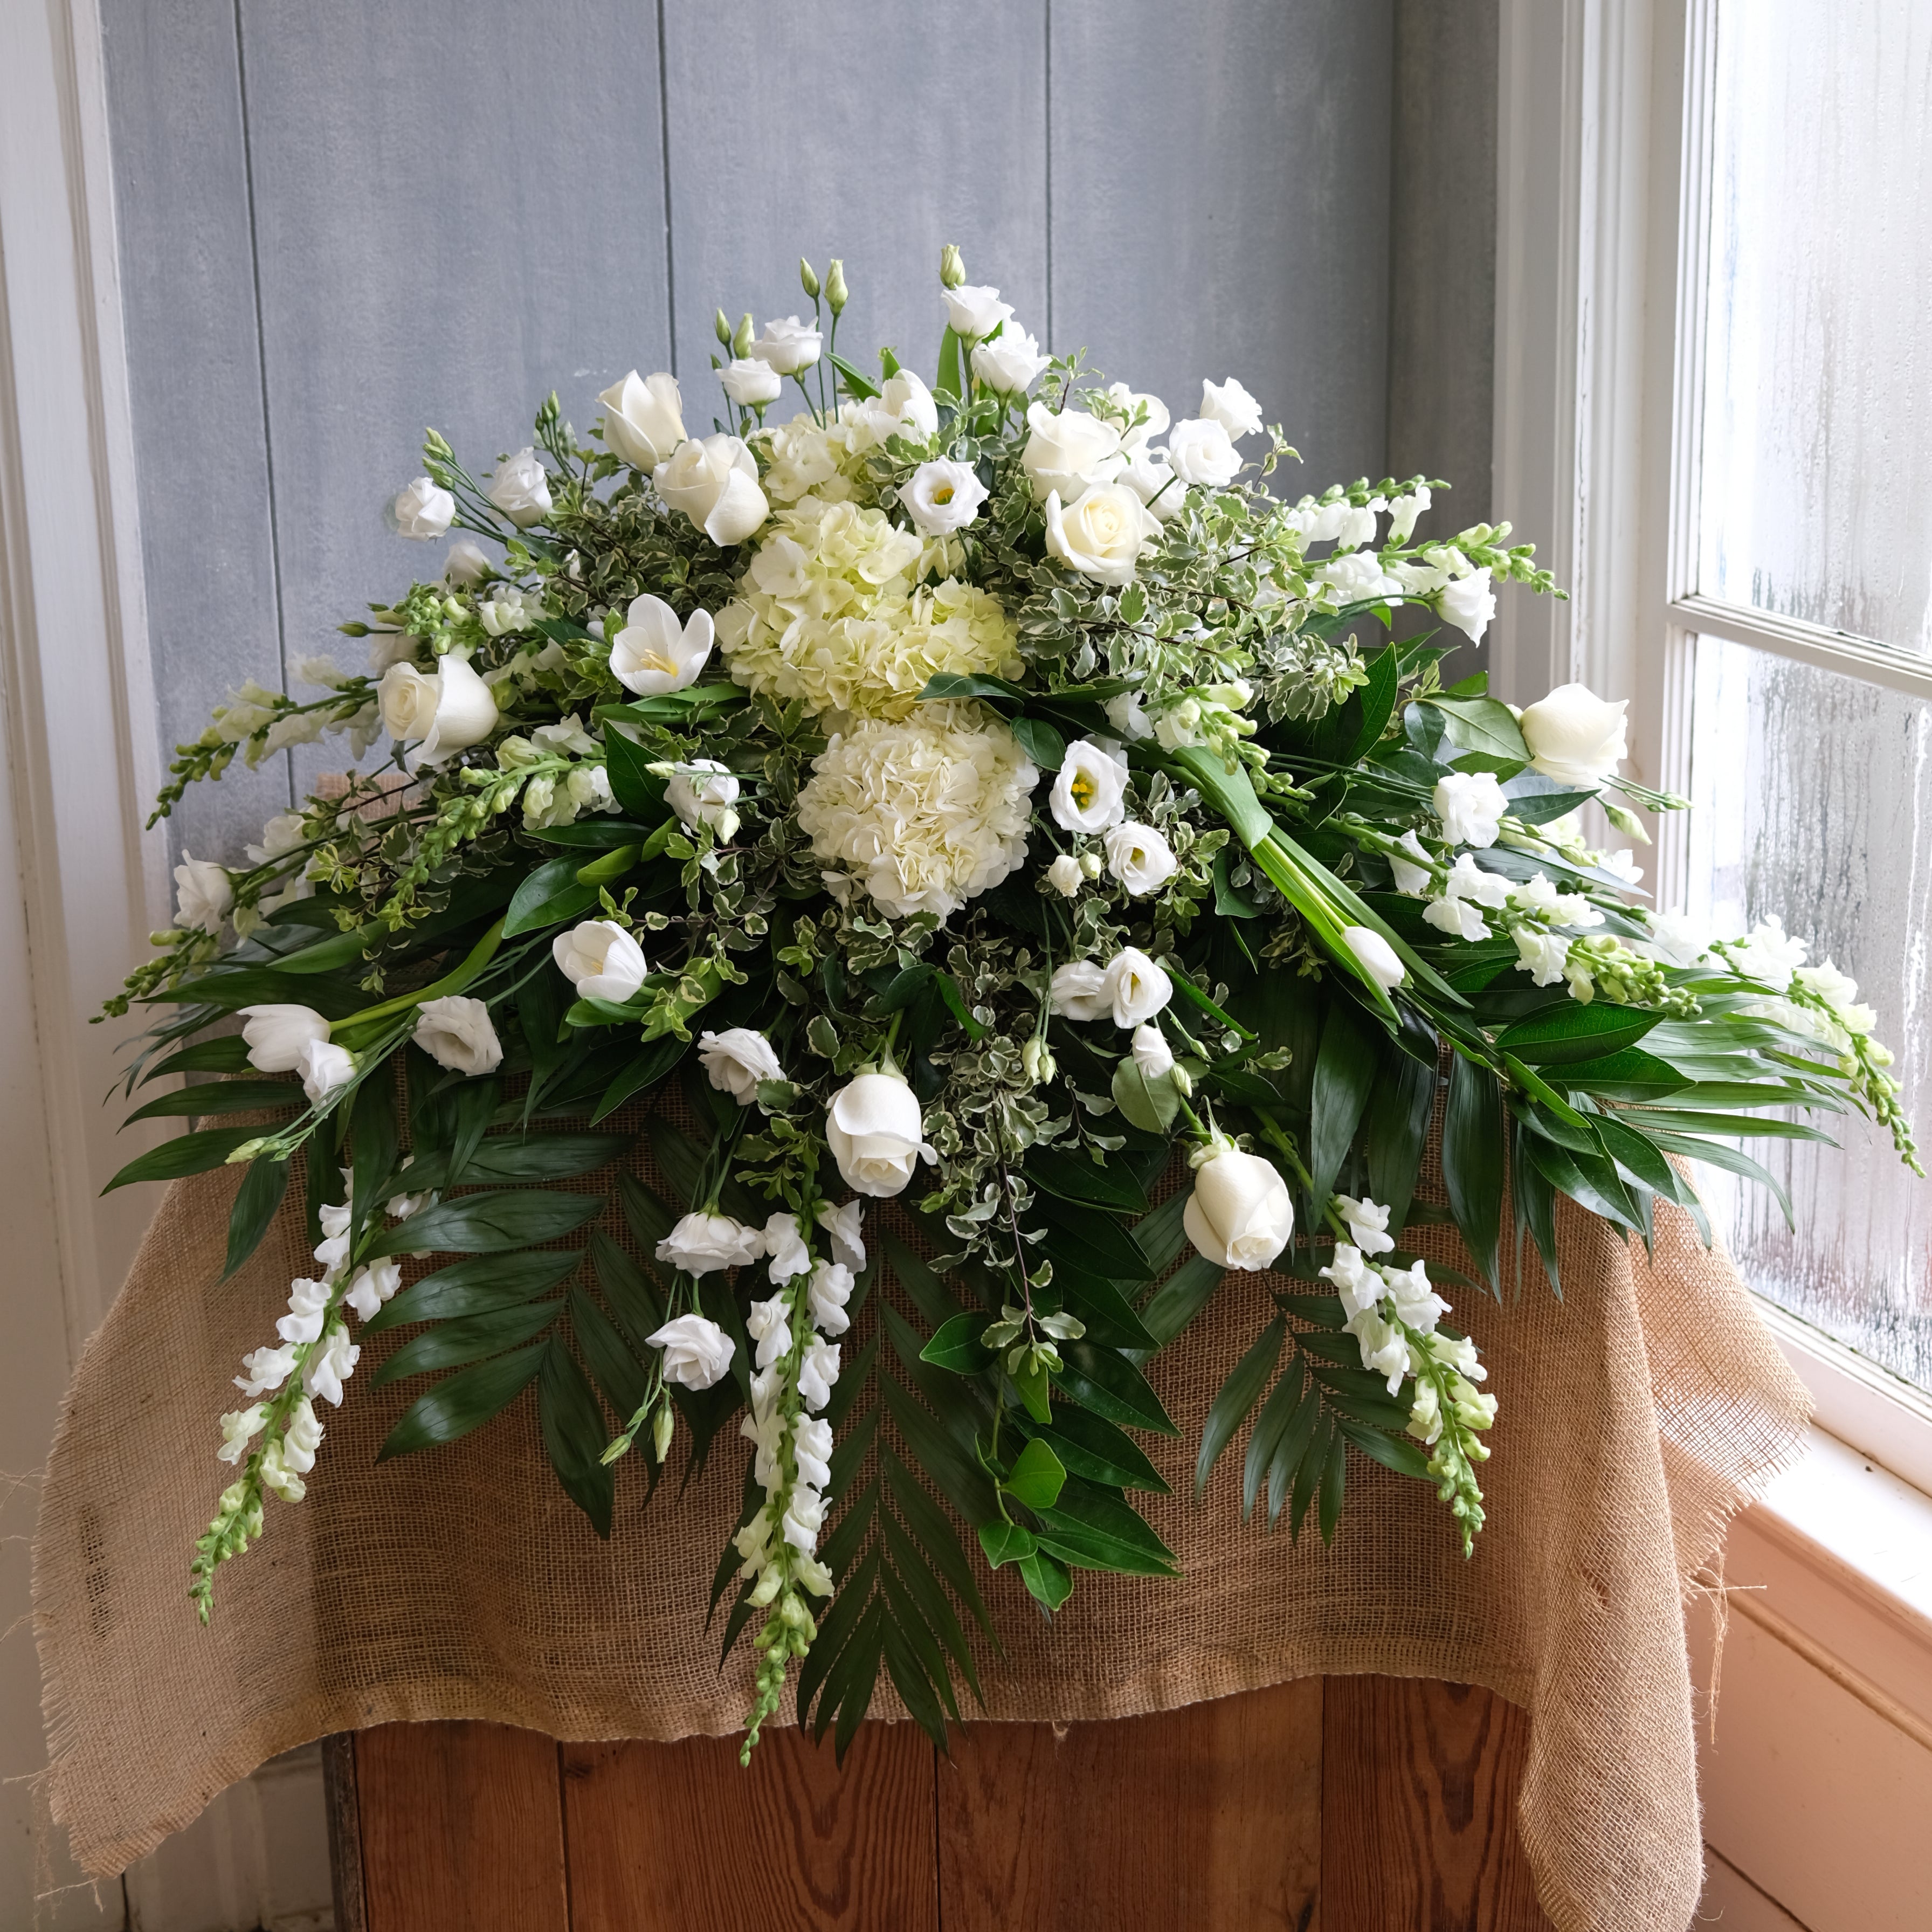 Funeral Flower Arrangements for Caskets